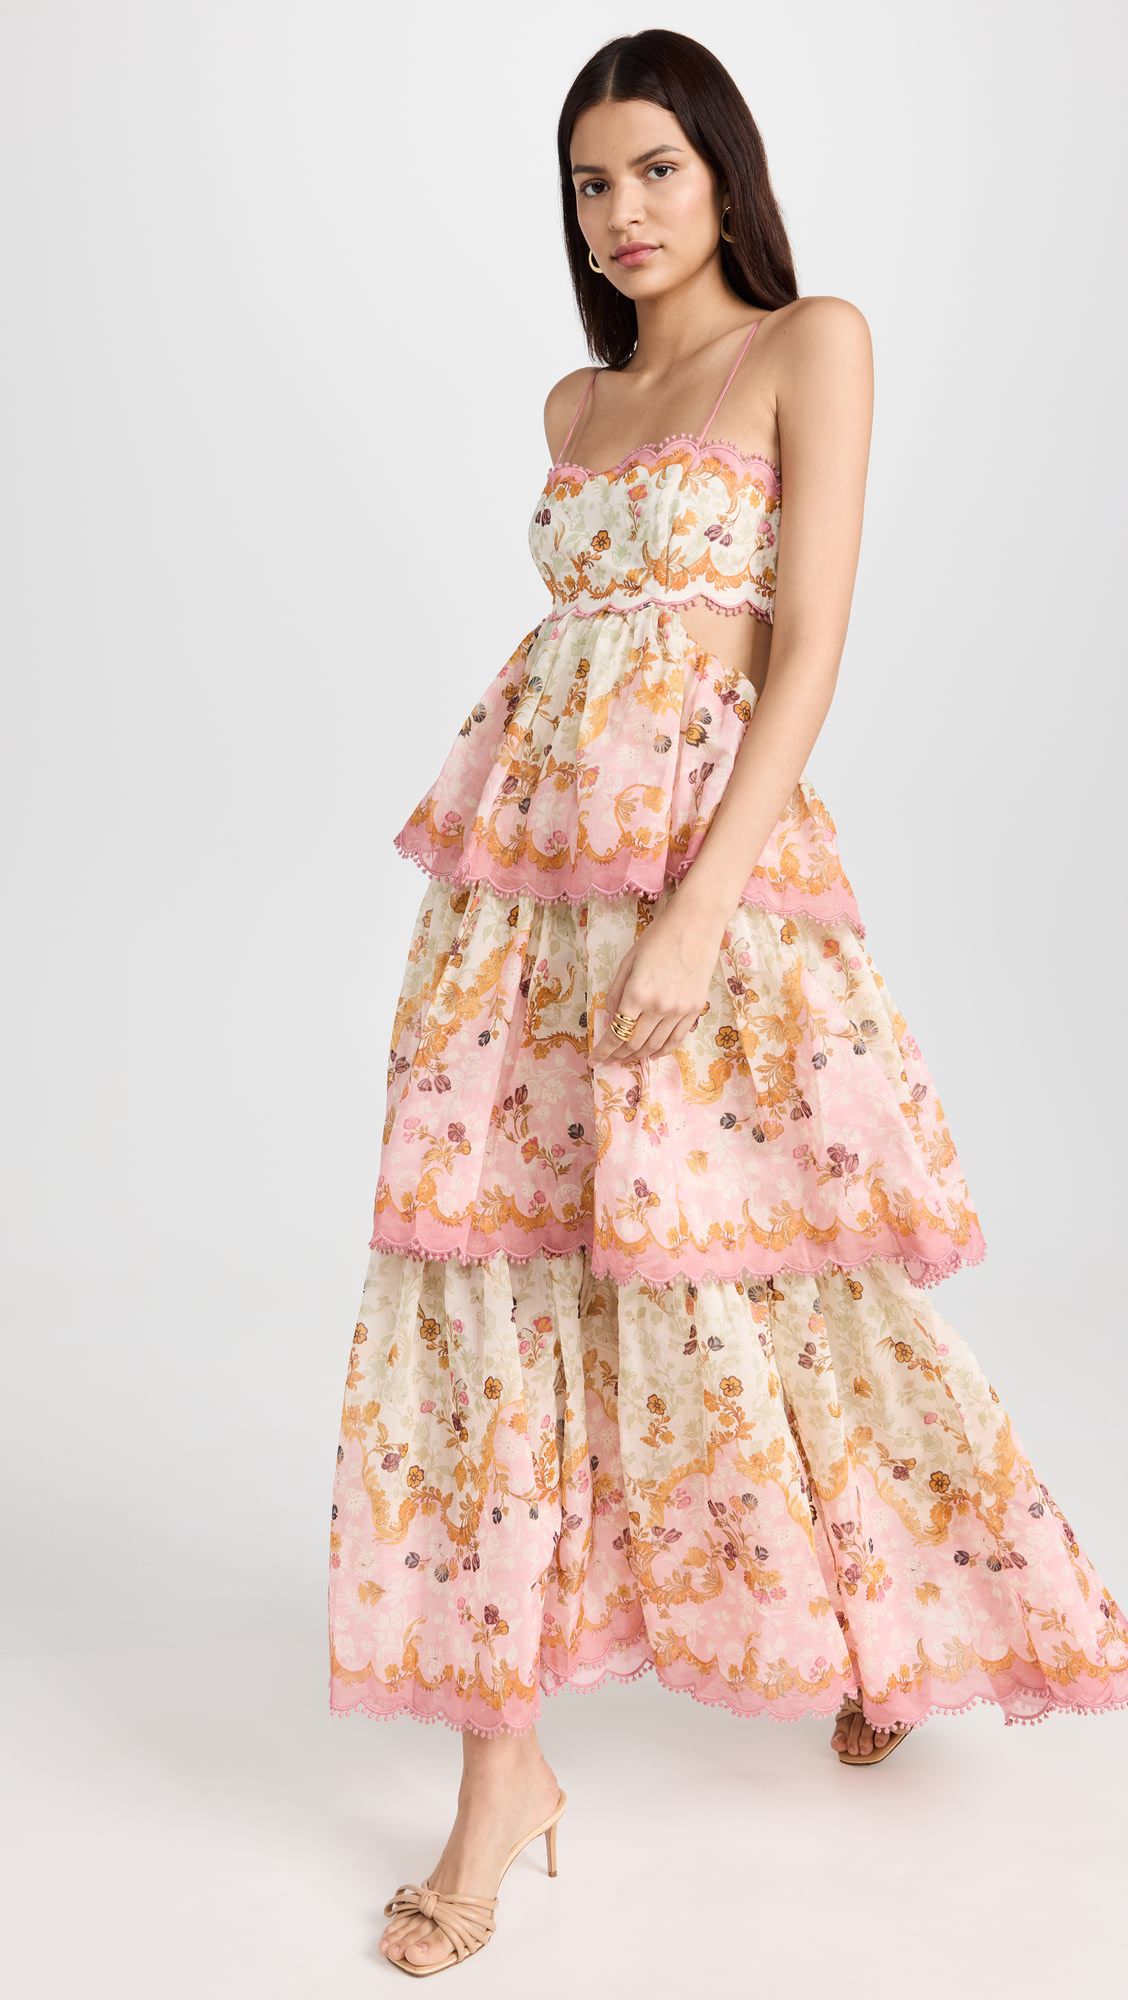 Elegant floral Printing backless frilly halter cake maxi dress